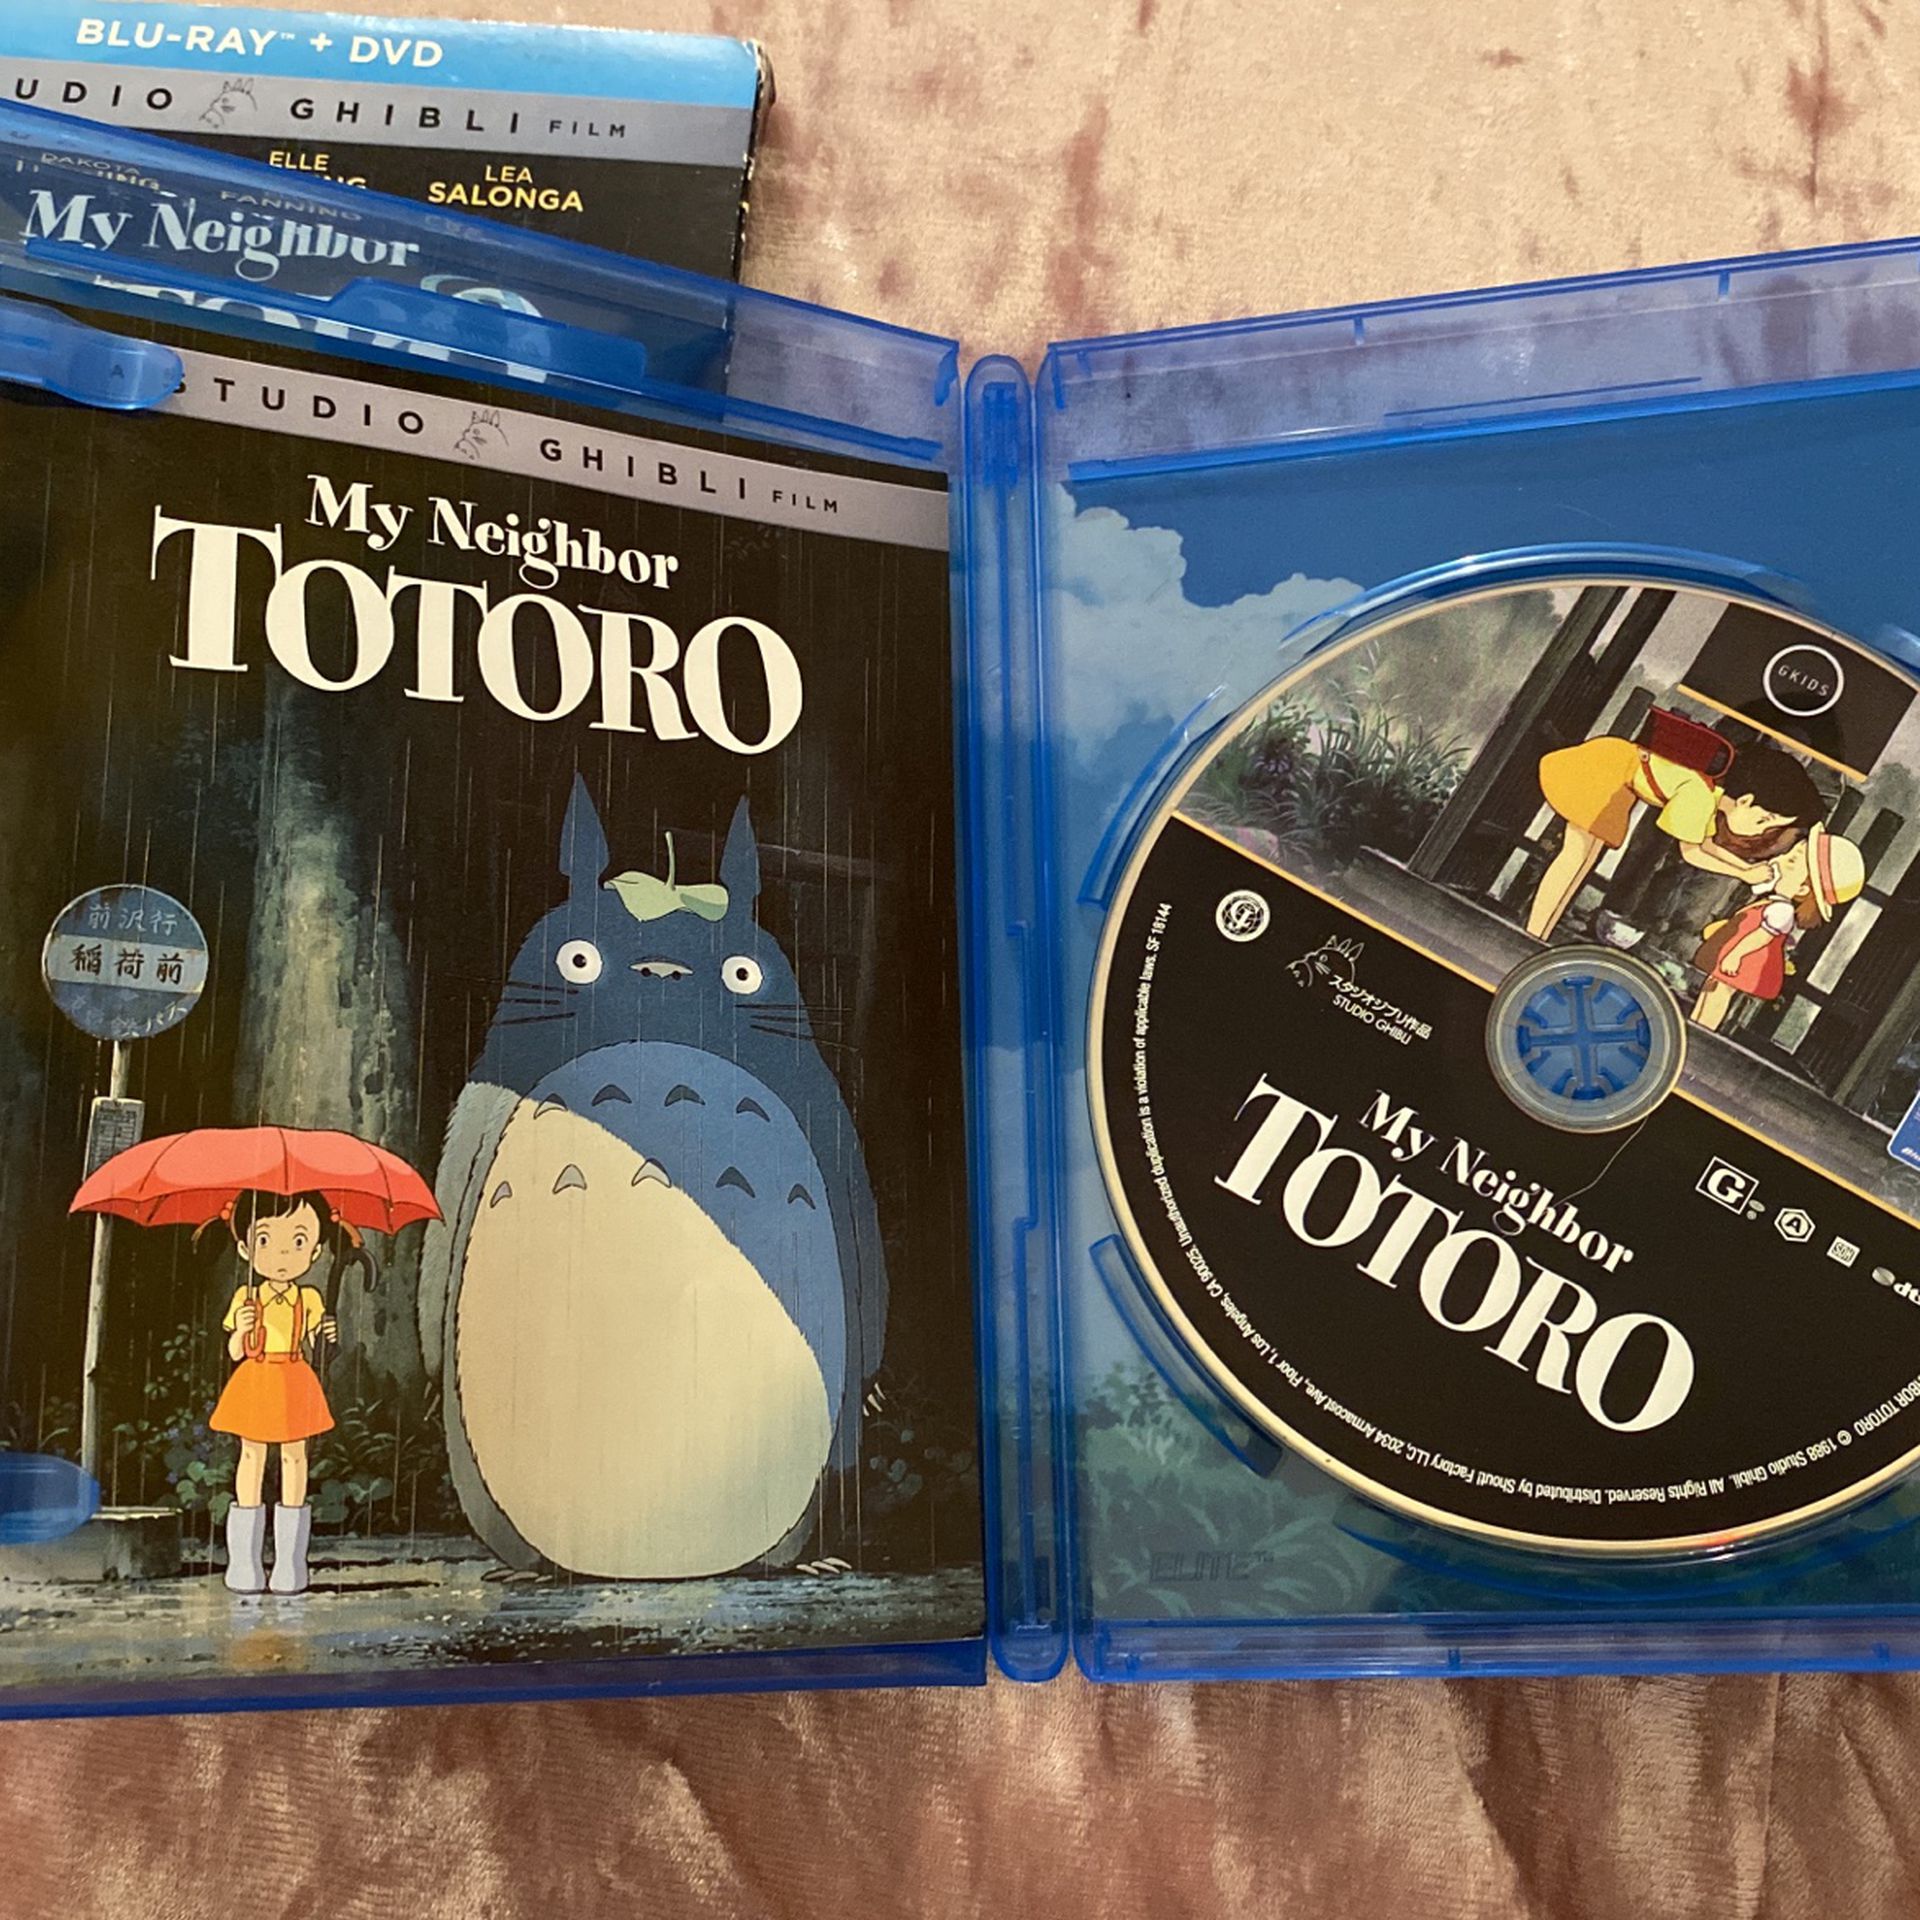 My Neighbor Totoro [BLU-RAY + DVD] 